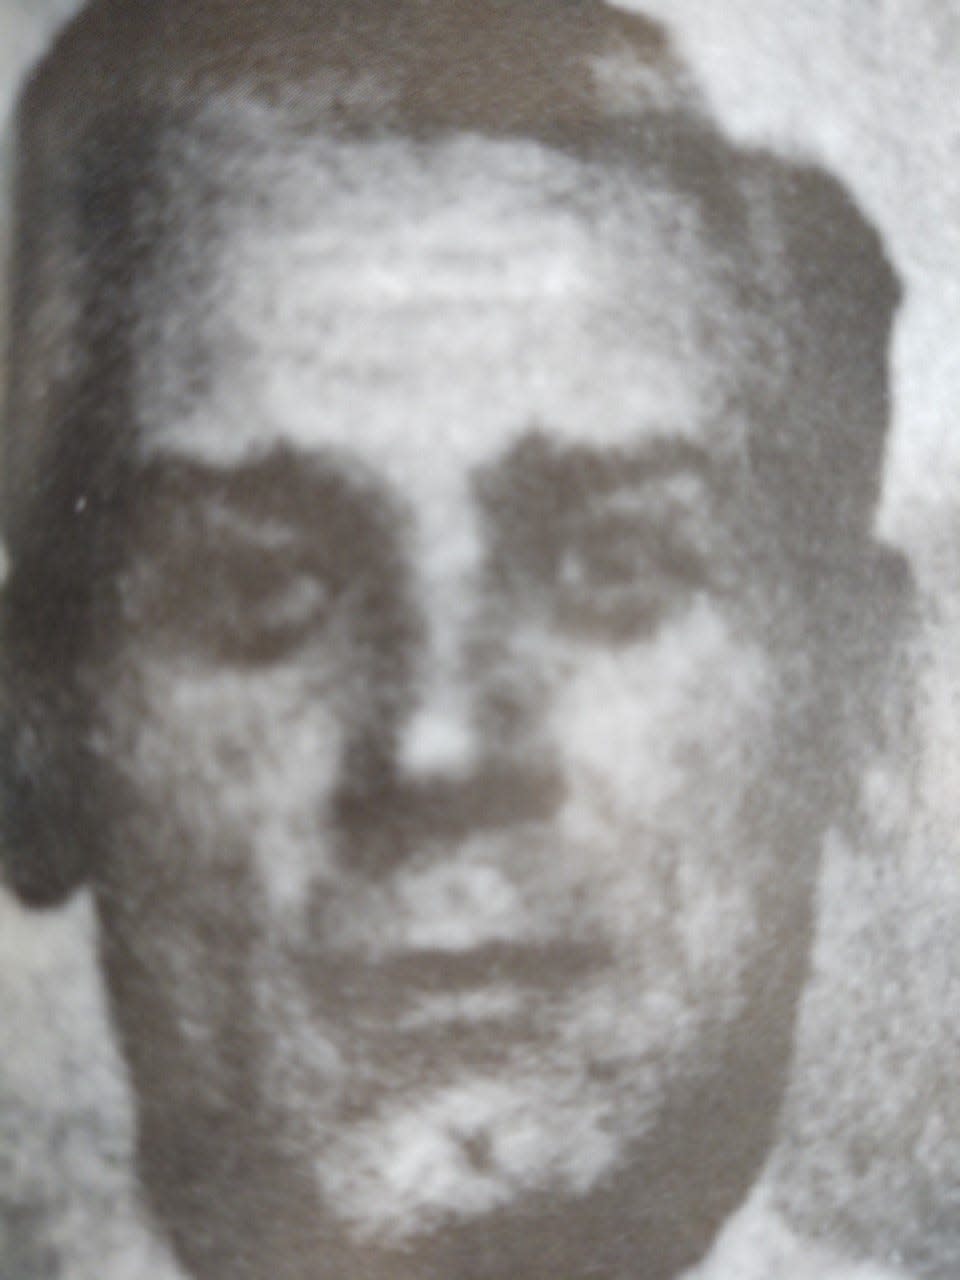 FBI mug shot of Florie, Joe Pantoliano's stepfather